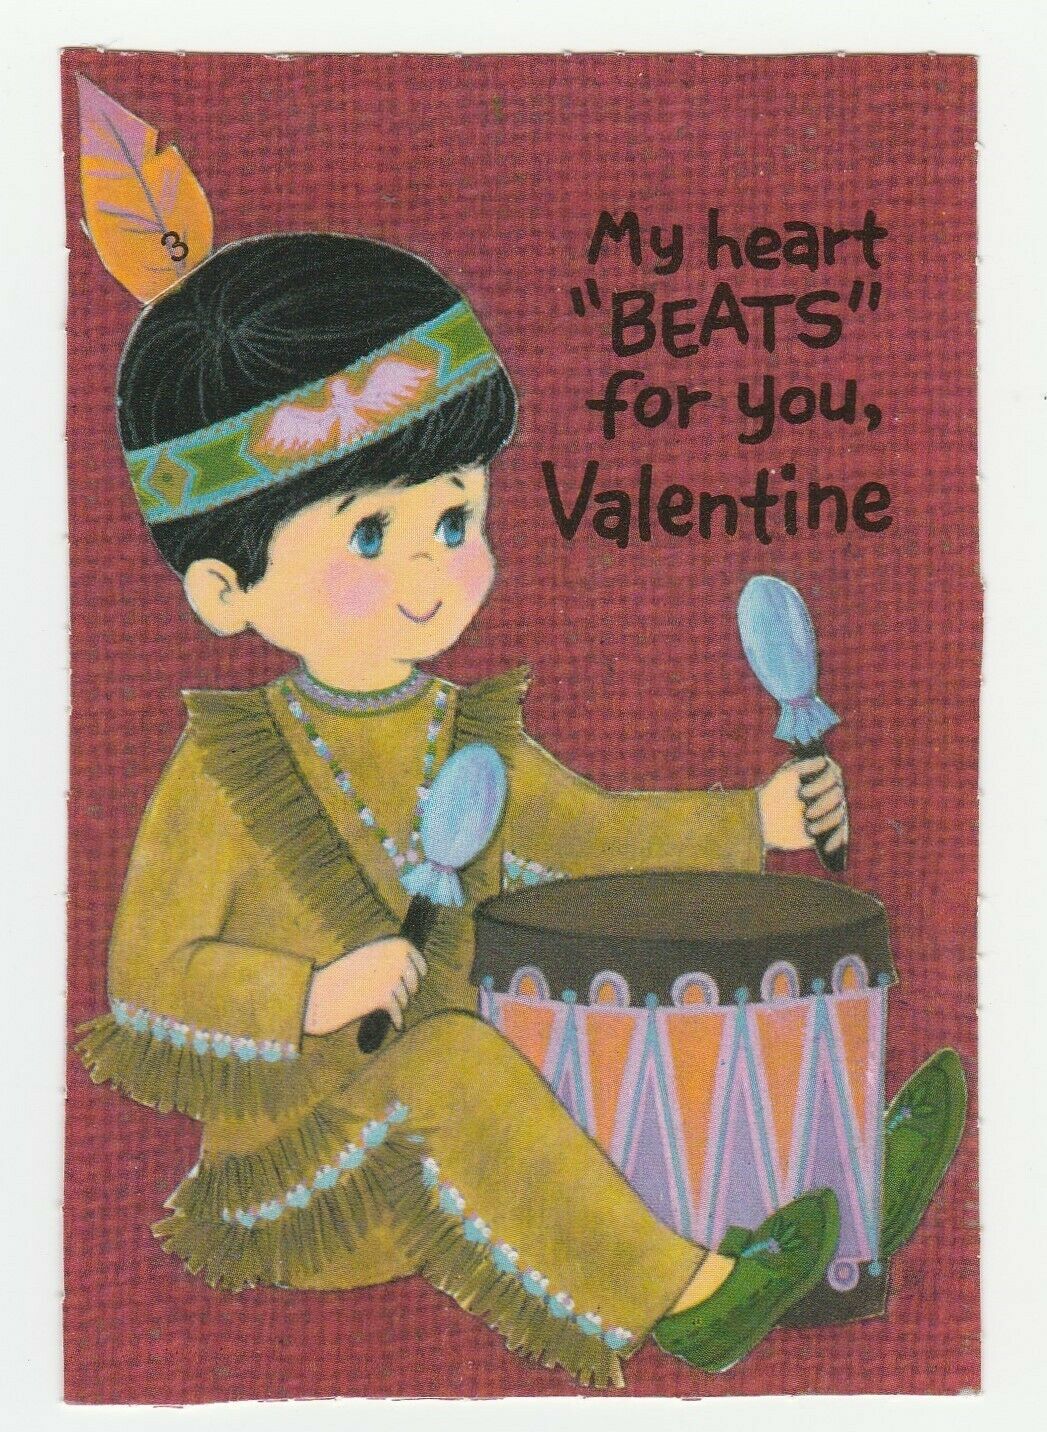 Vintage Valentine Card Boy in Native American Indian Costume Plays Drum - $7.91